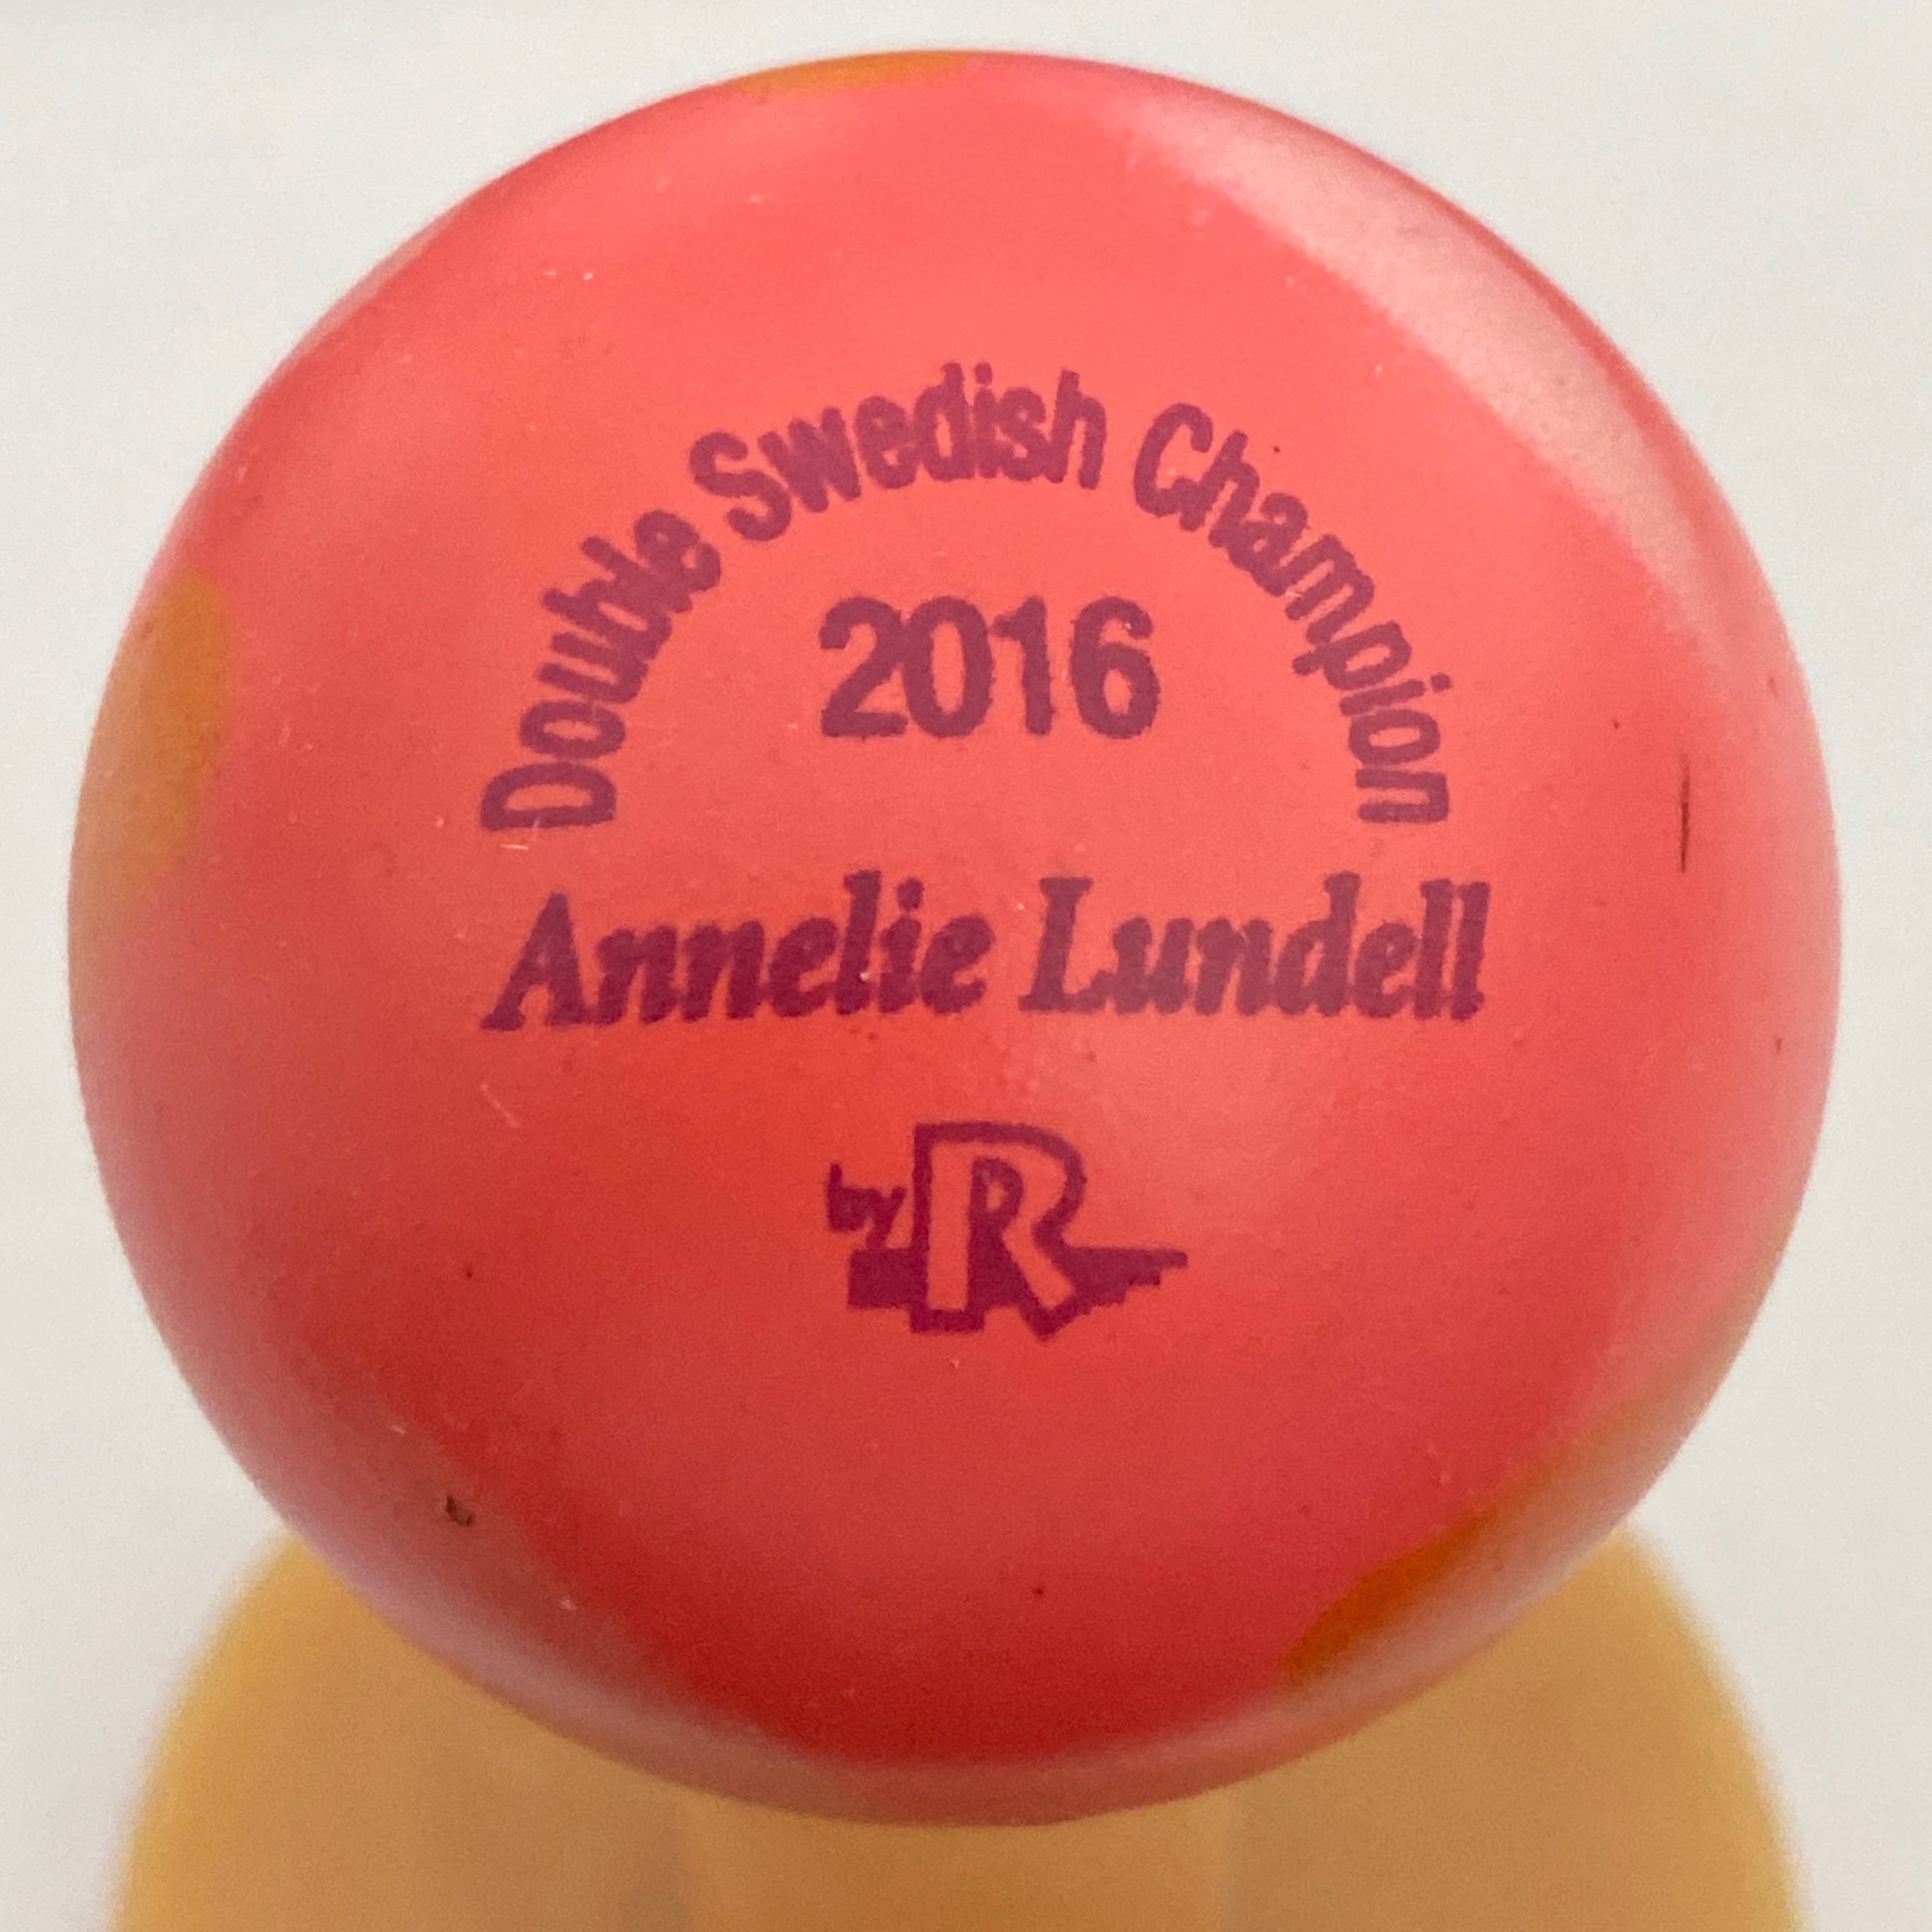 double_swedish_champion_2016_annelie_lundell.jpg